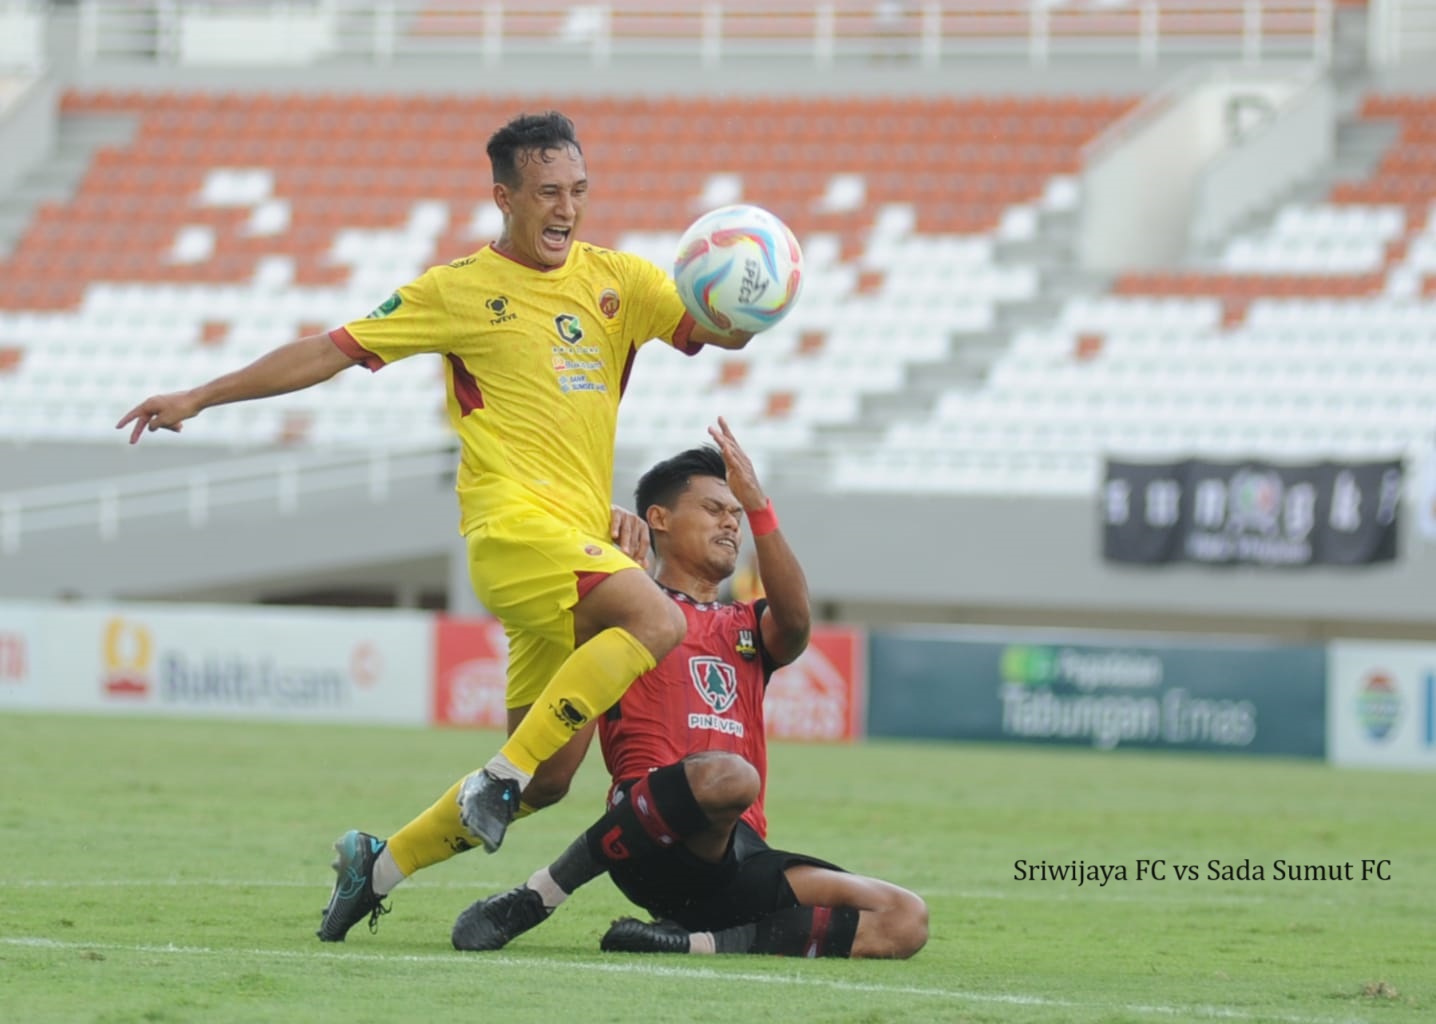 Kalahkan Sada Sumut dengan skor 3-1, Sriwijaya FC Langsung Puncaki Klasemen